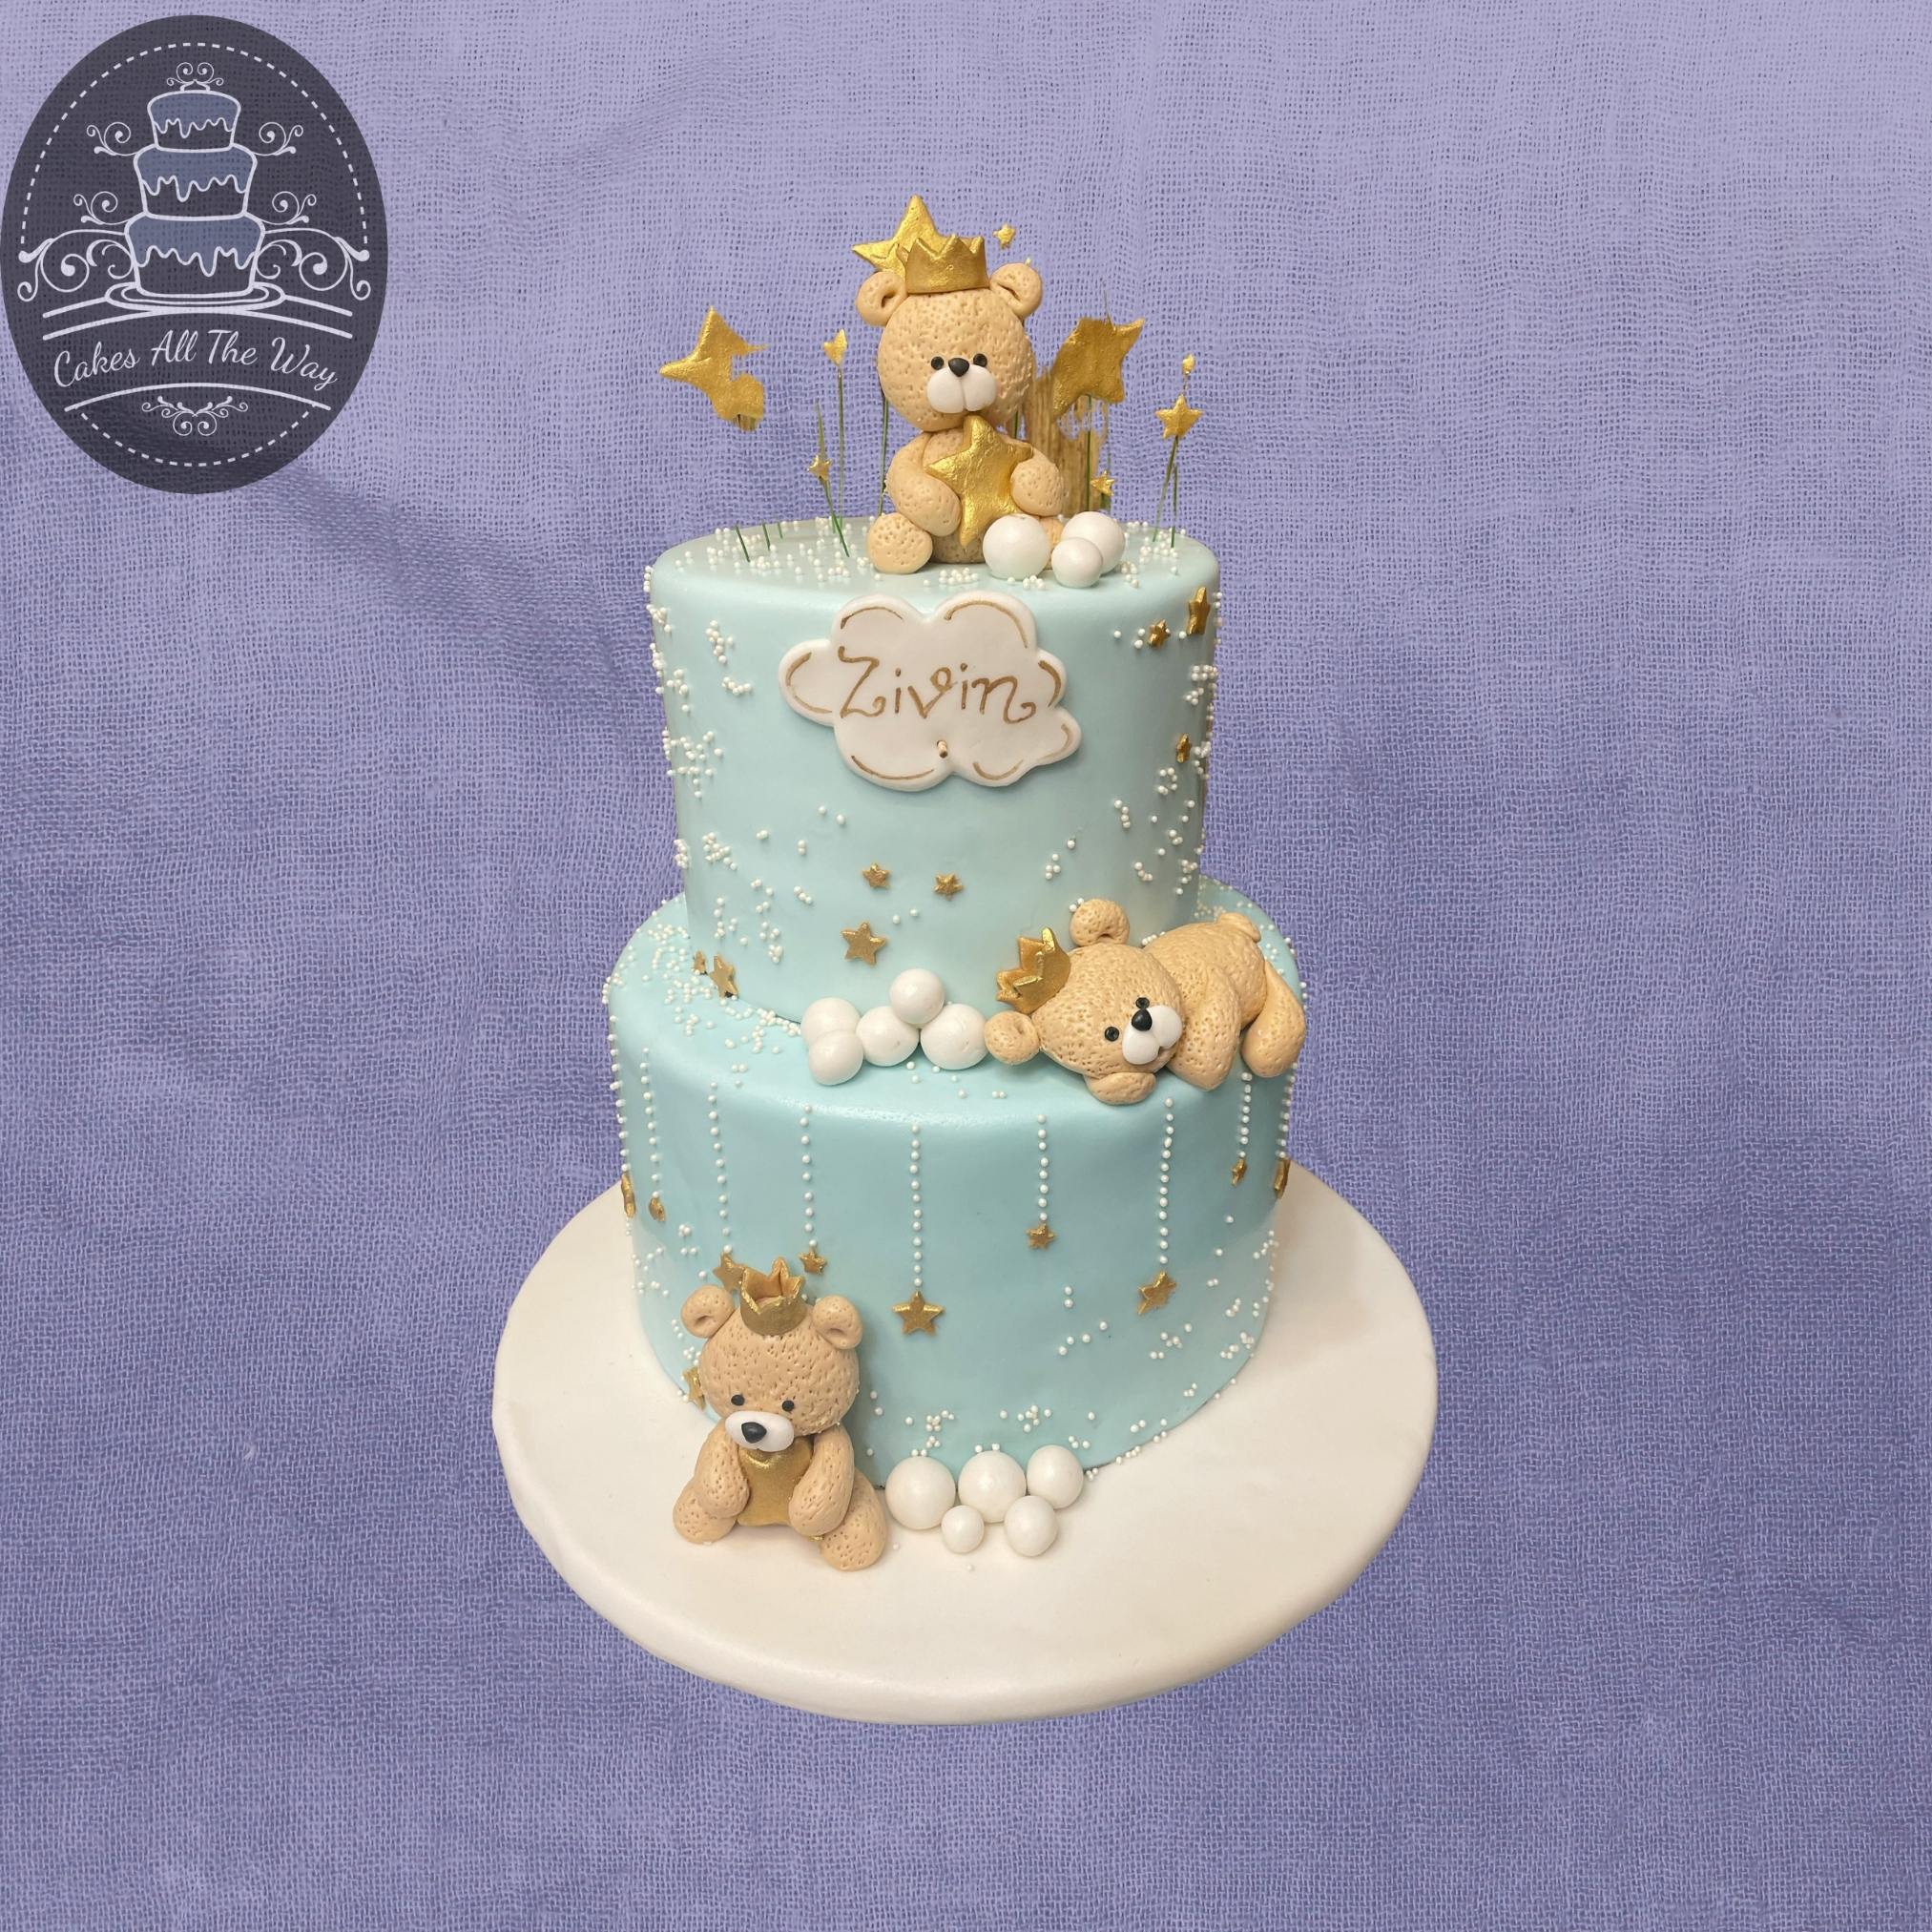 Hello, Yummy - TEDDY BEAR CAKE 💗 Credit: Julie Anne Cake Design | Facebook